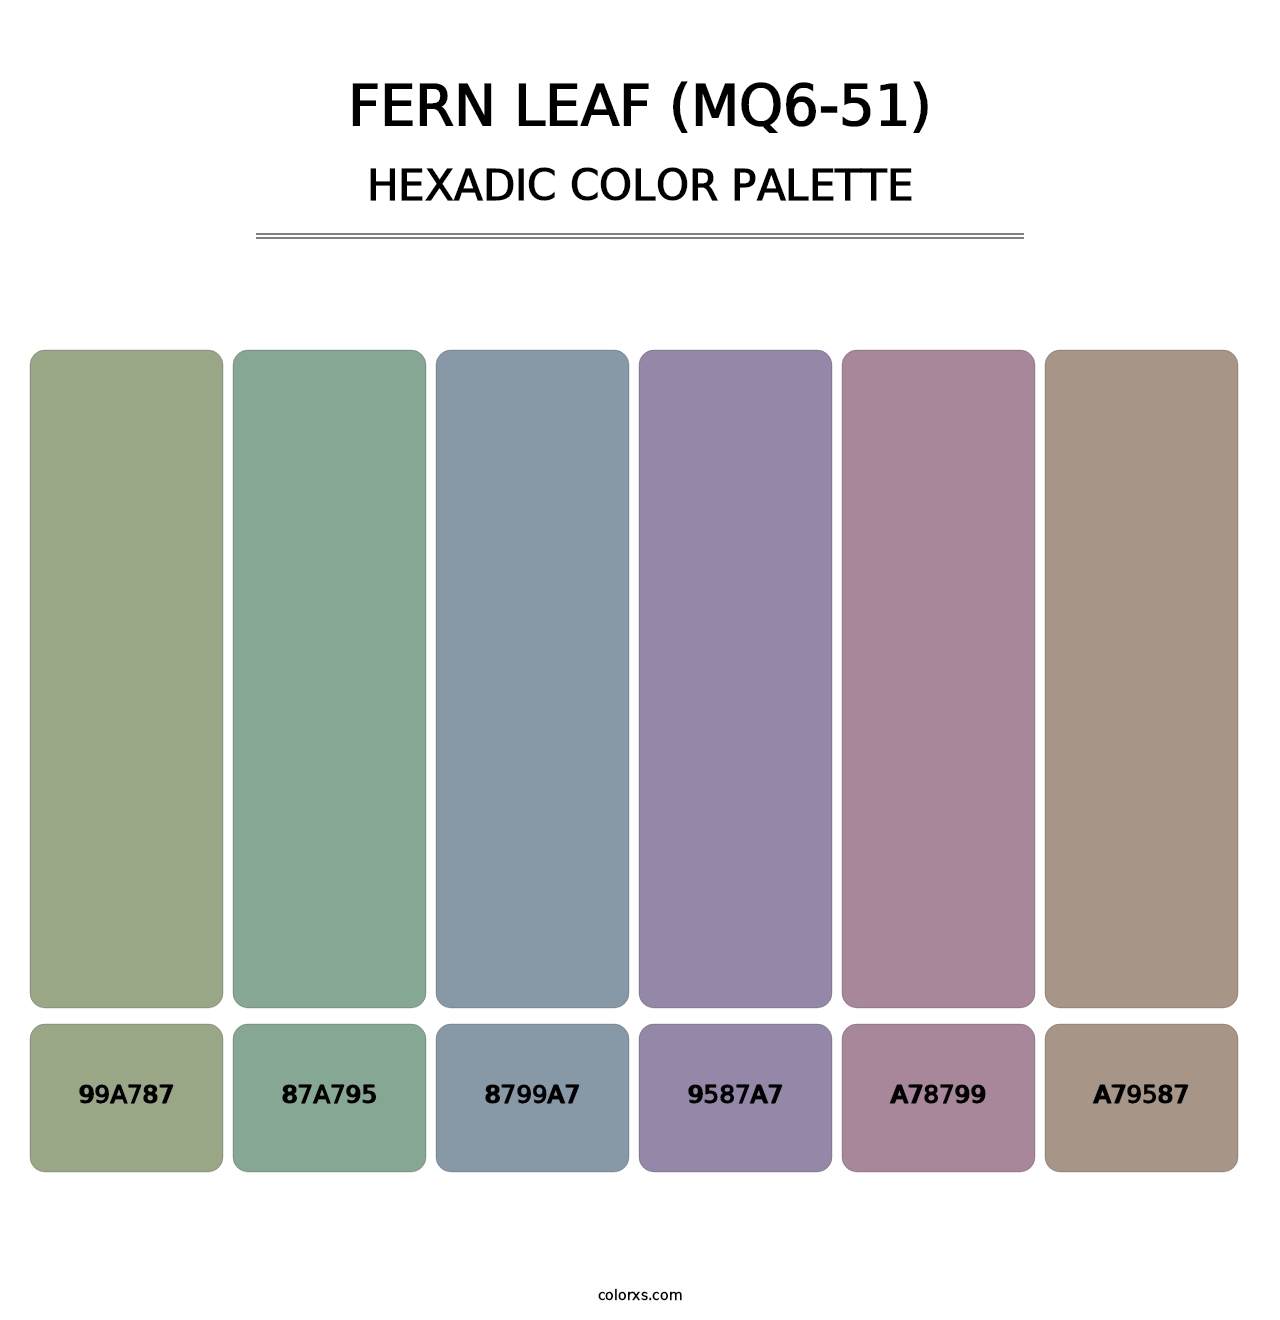 Fern Leaf (MQ6-51) - Hexadic Color Palette